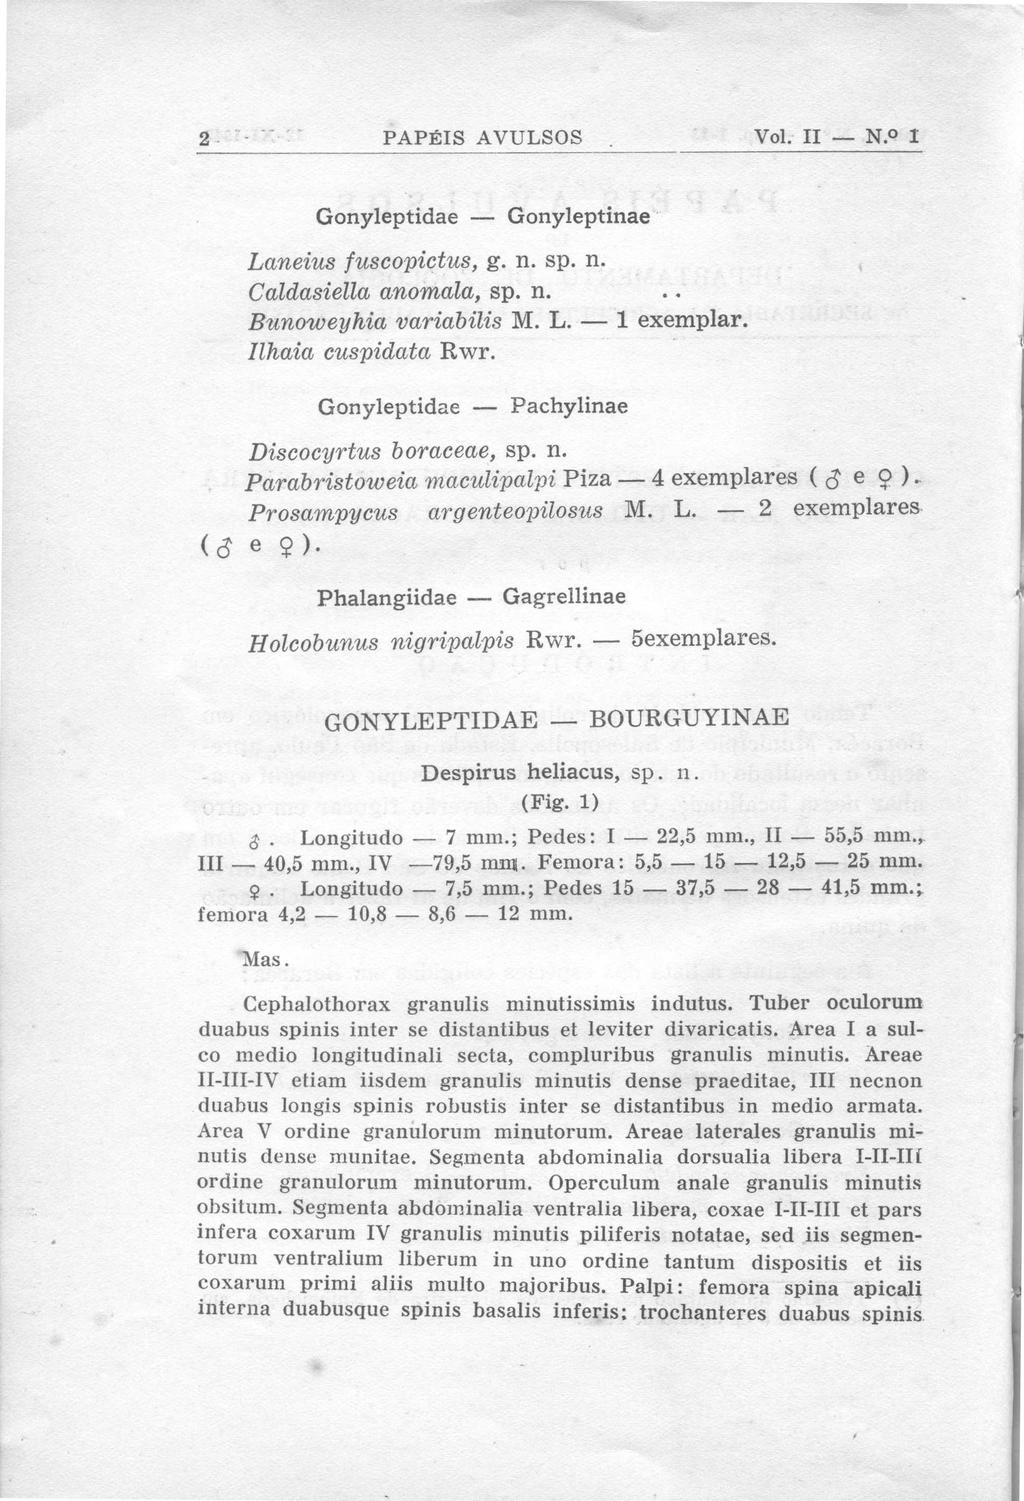 2 PAPÉIS AVULSOS Vol. II N I Gonyleptidae Gonyleptina e Laneius fuscopictus, g. n. sp. n. Caldasiella anomala, sp. n. Bunoweyhia variabilis M. L. 1 exemplar. Ilhaia cuspidata Rwr.